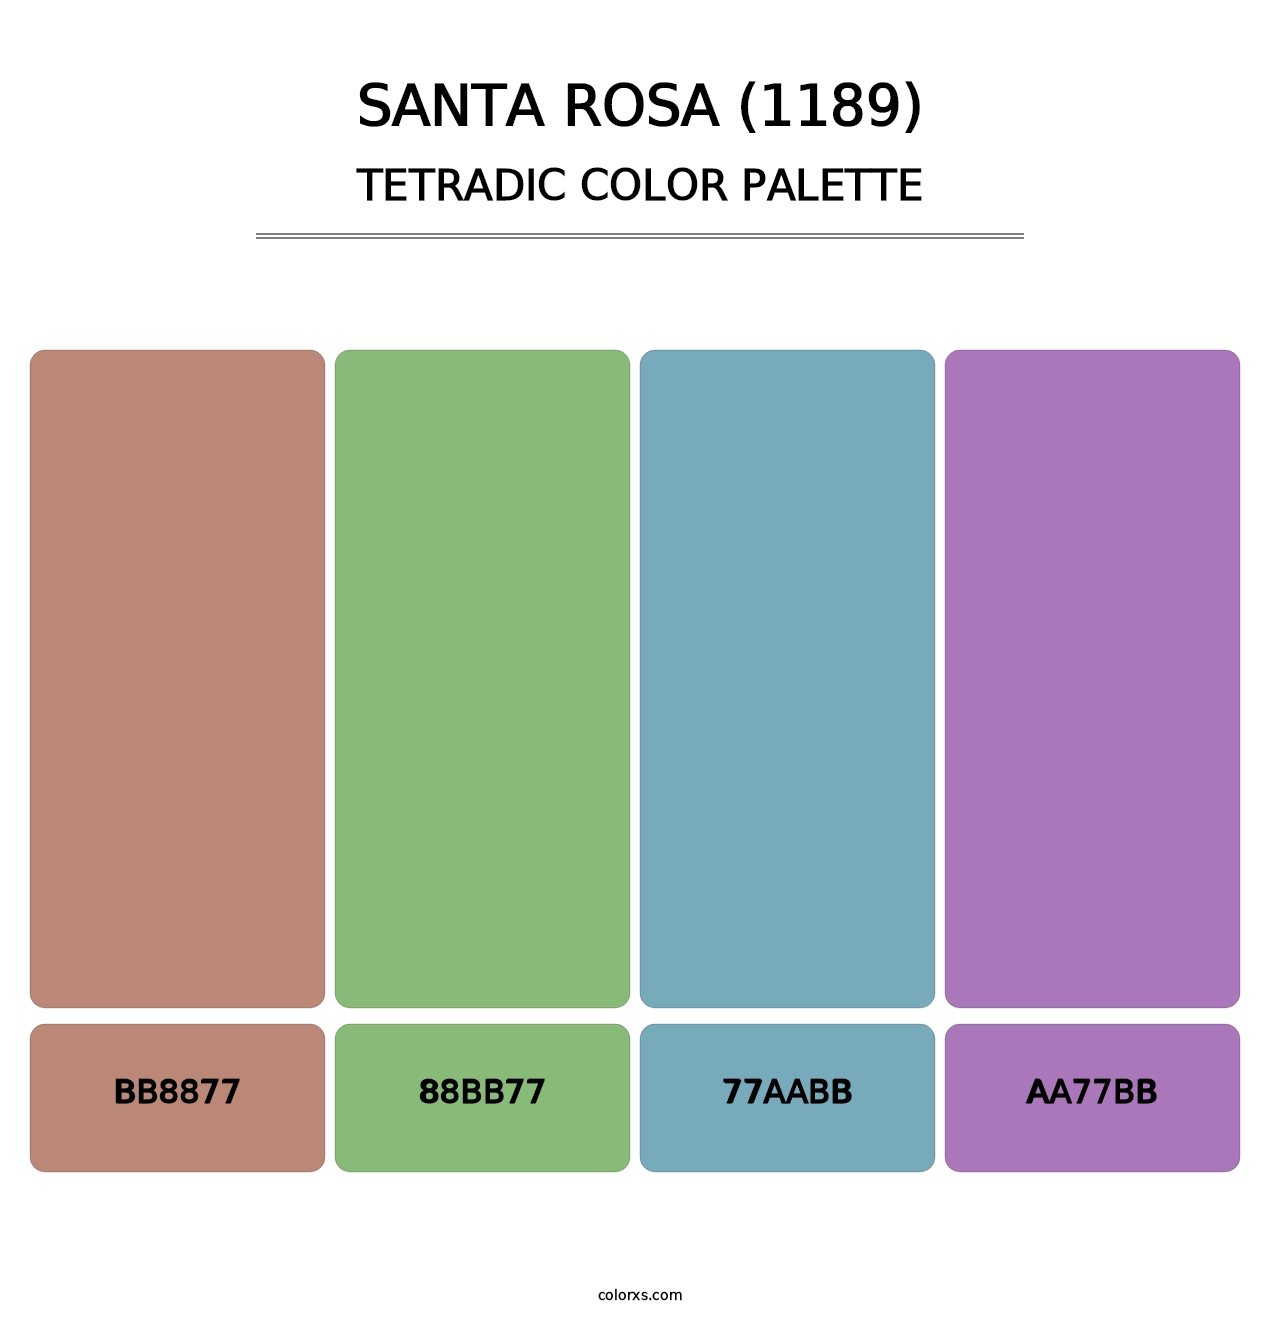 Santa Rosa (1189) - Tetradic Color Palette